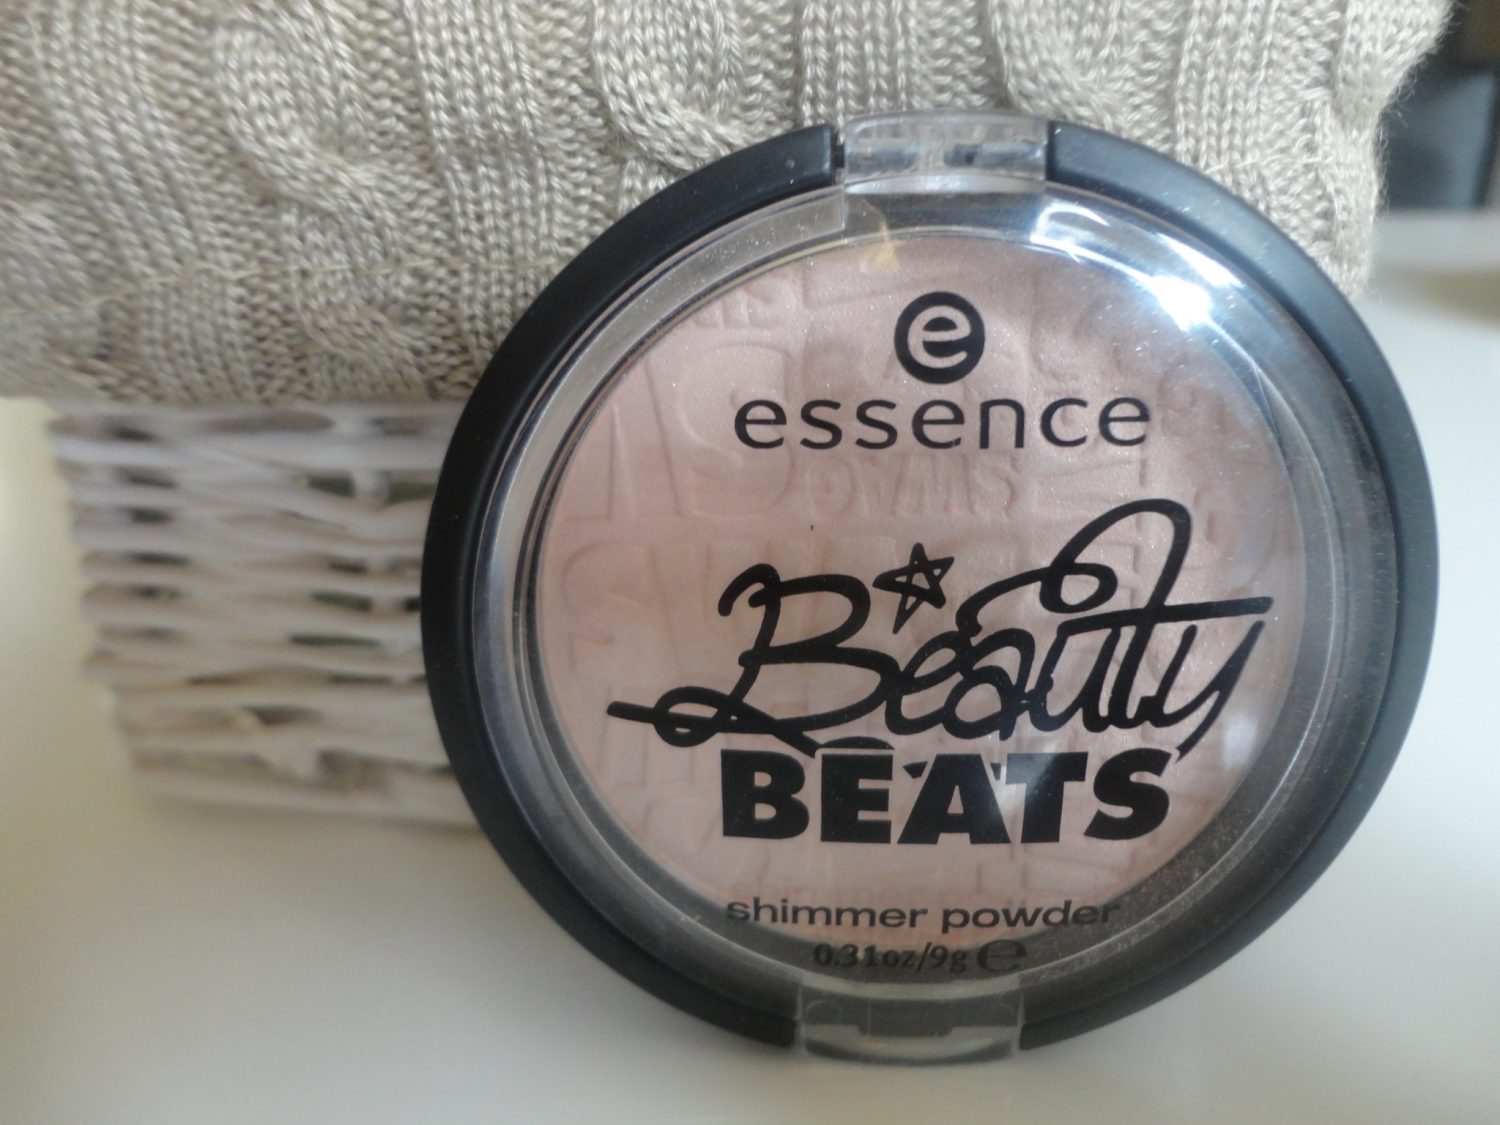 Review: Essence Beauty Beats Shimmer Powder